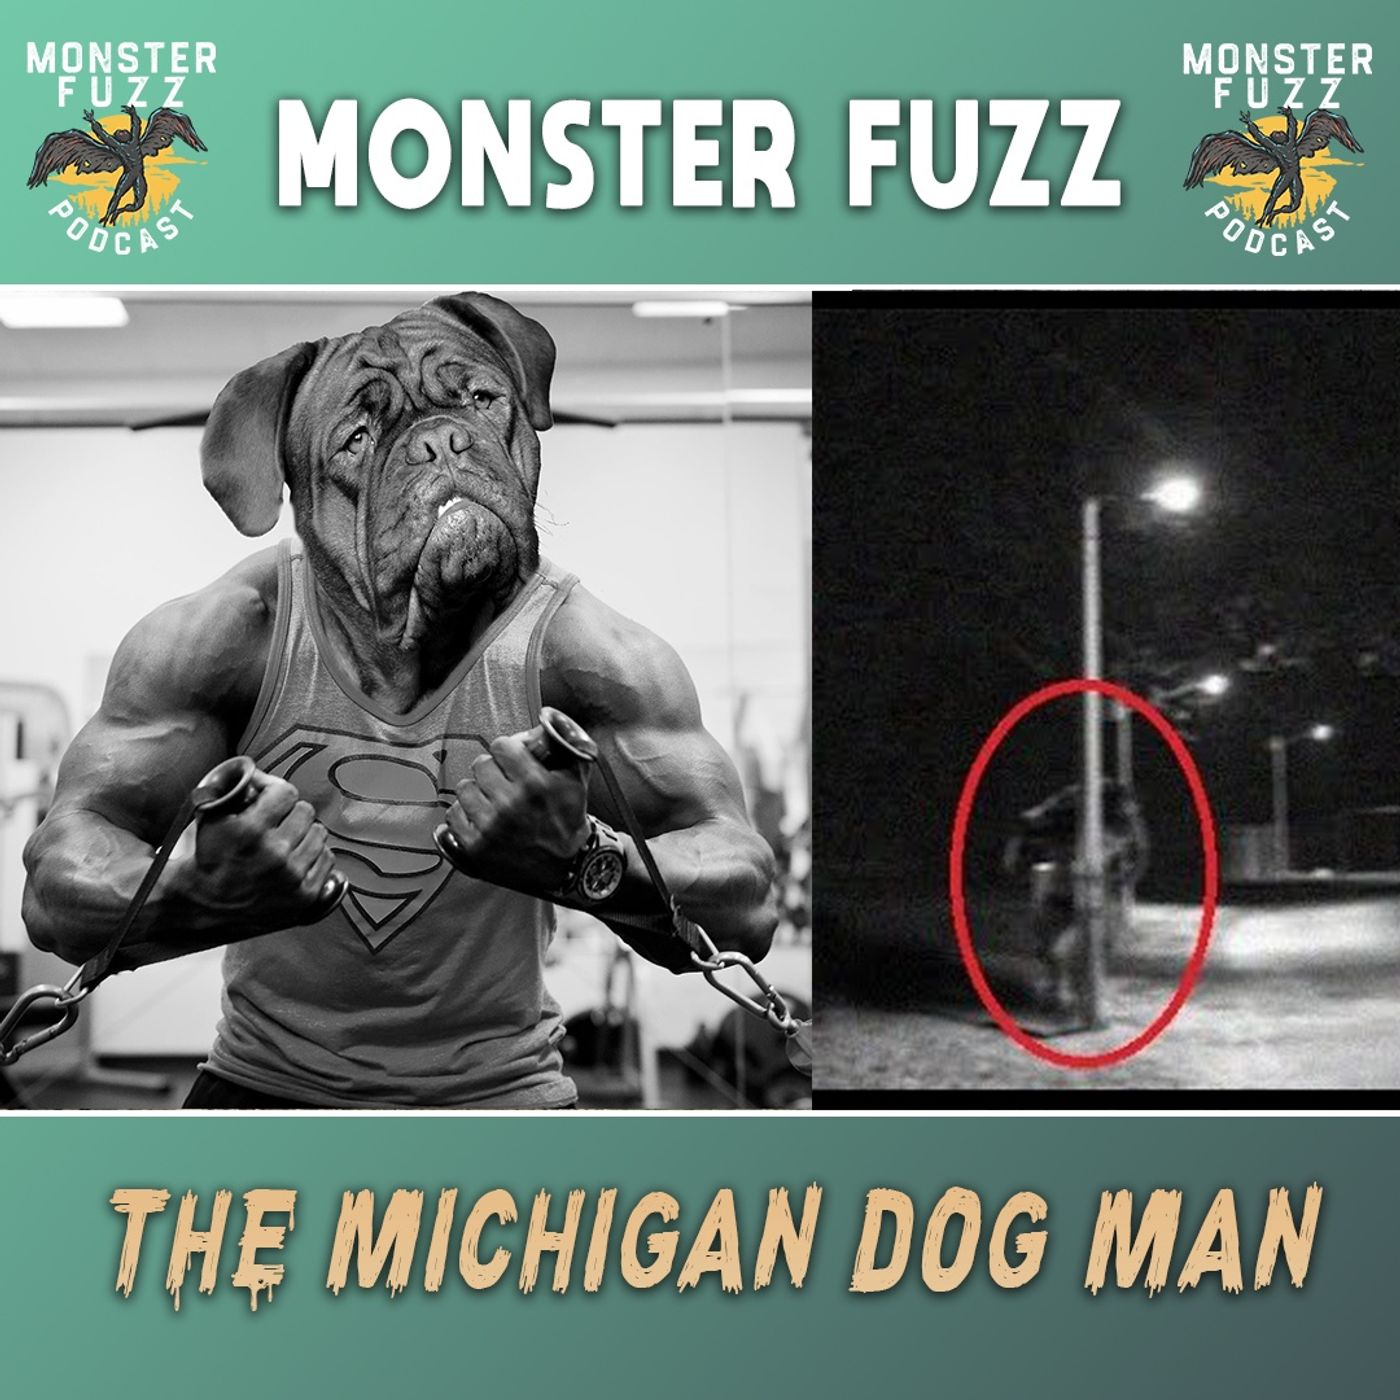 The Michigan Dogman!